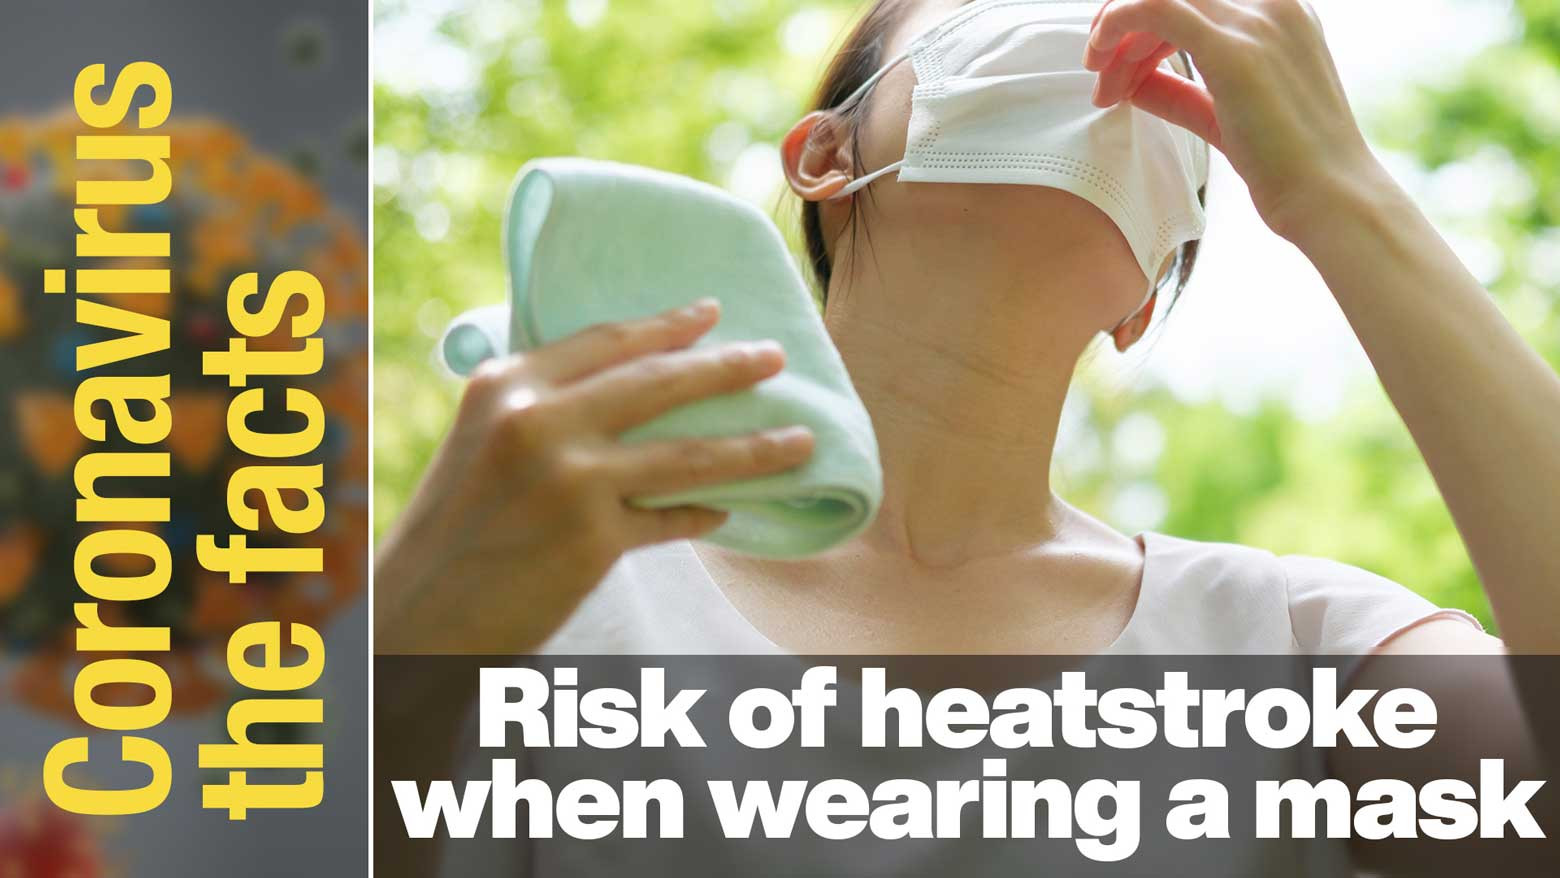 Does wearing a mask increase the risk of heatstroke?